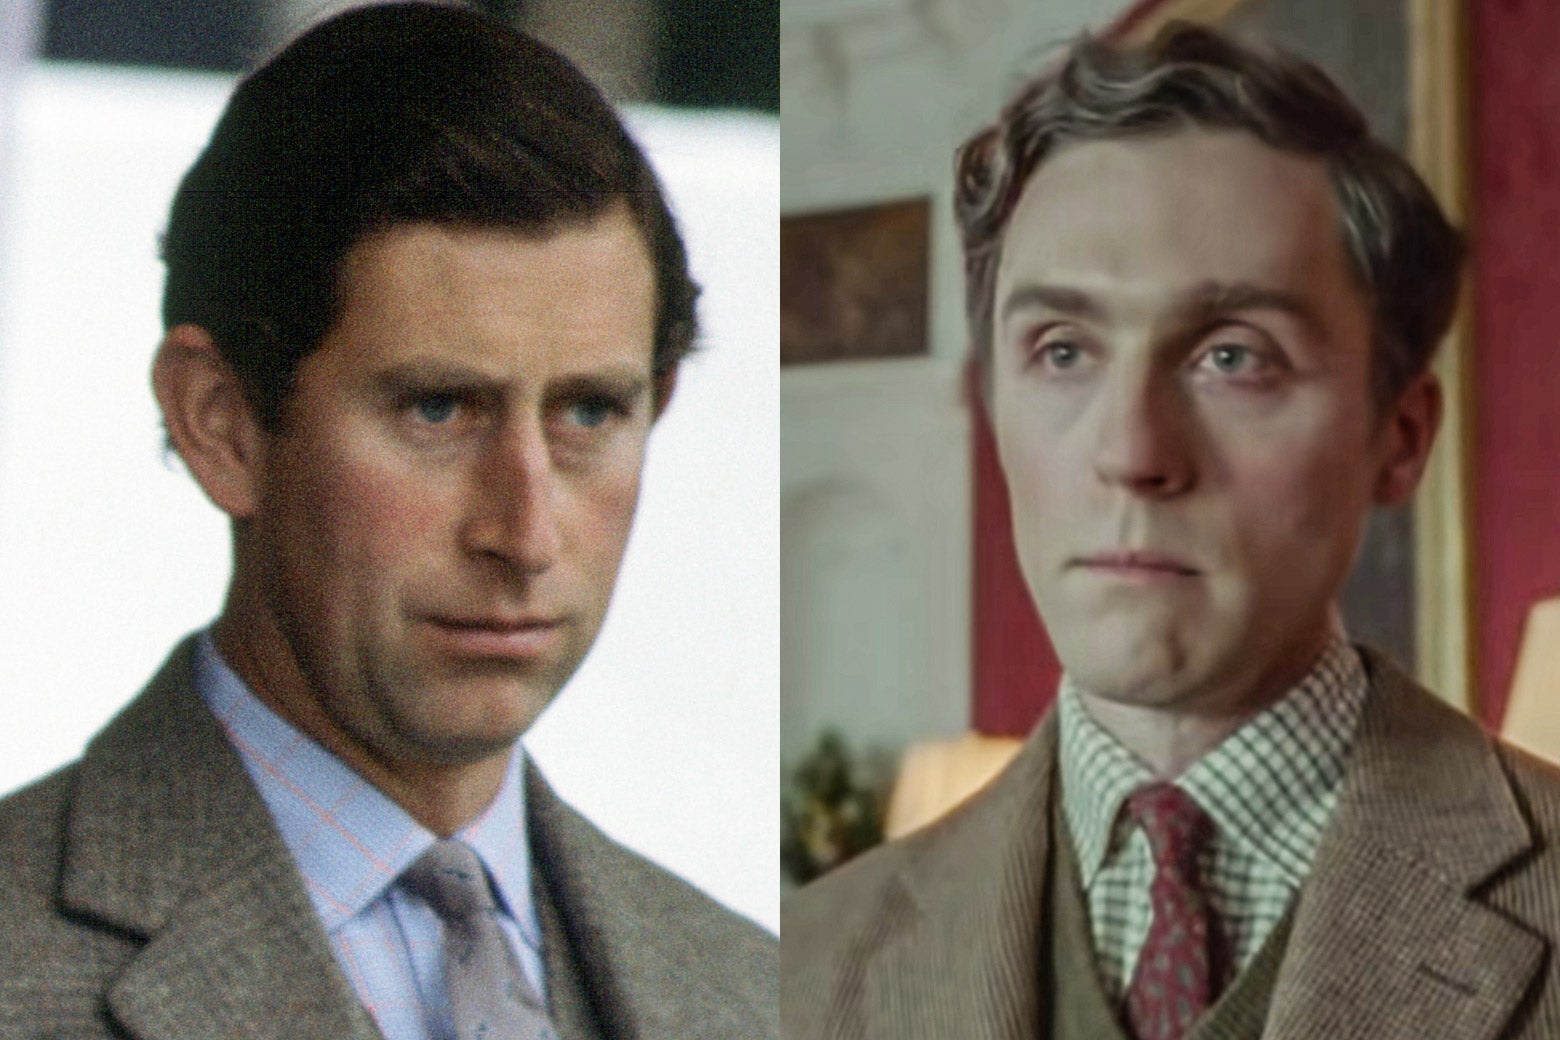 Prince Charles, and Jack Farthing as Charles in the film, both wearing brown tweed suits.